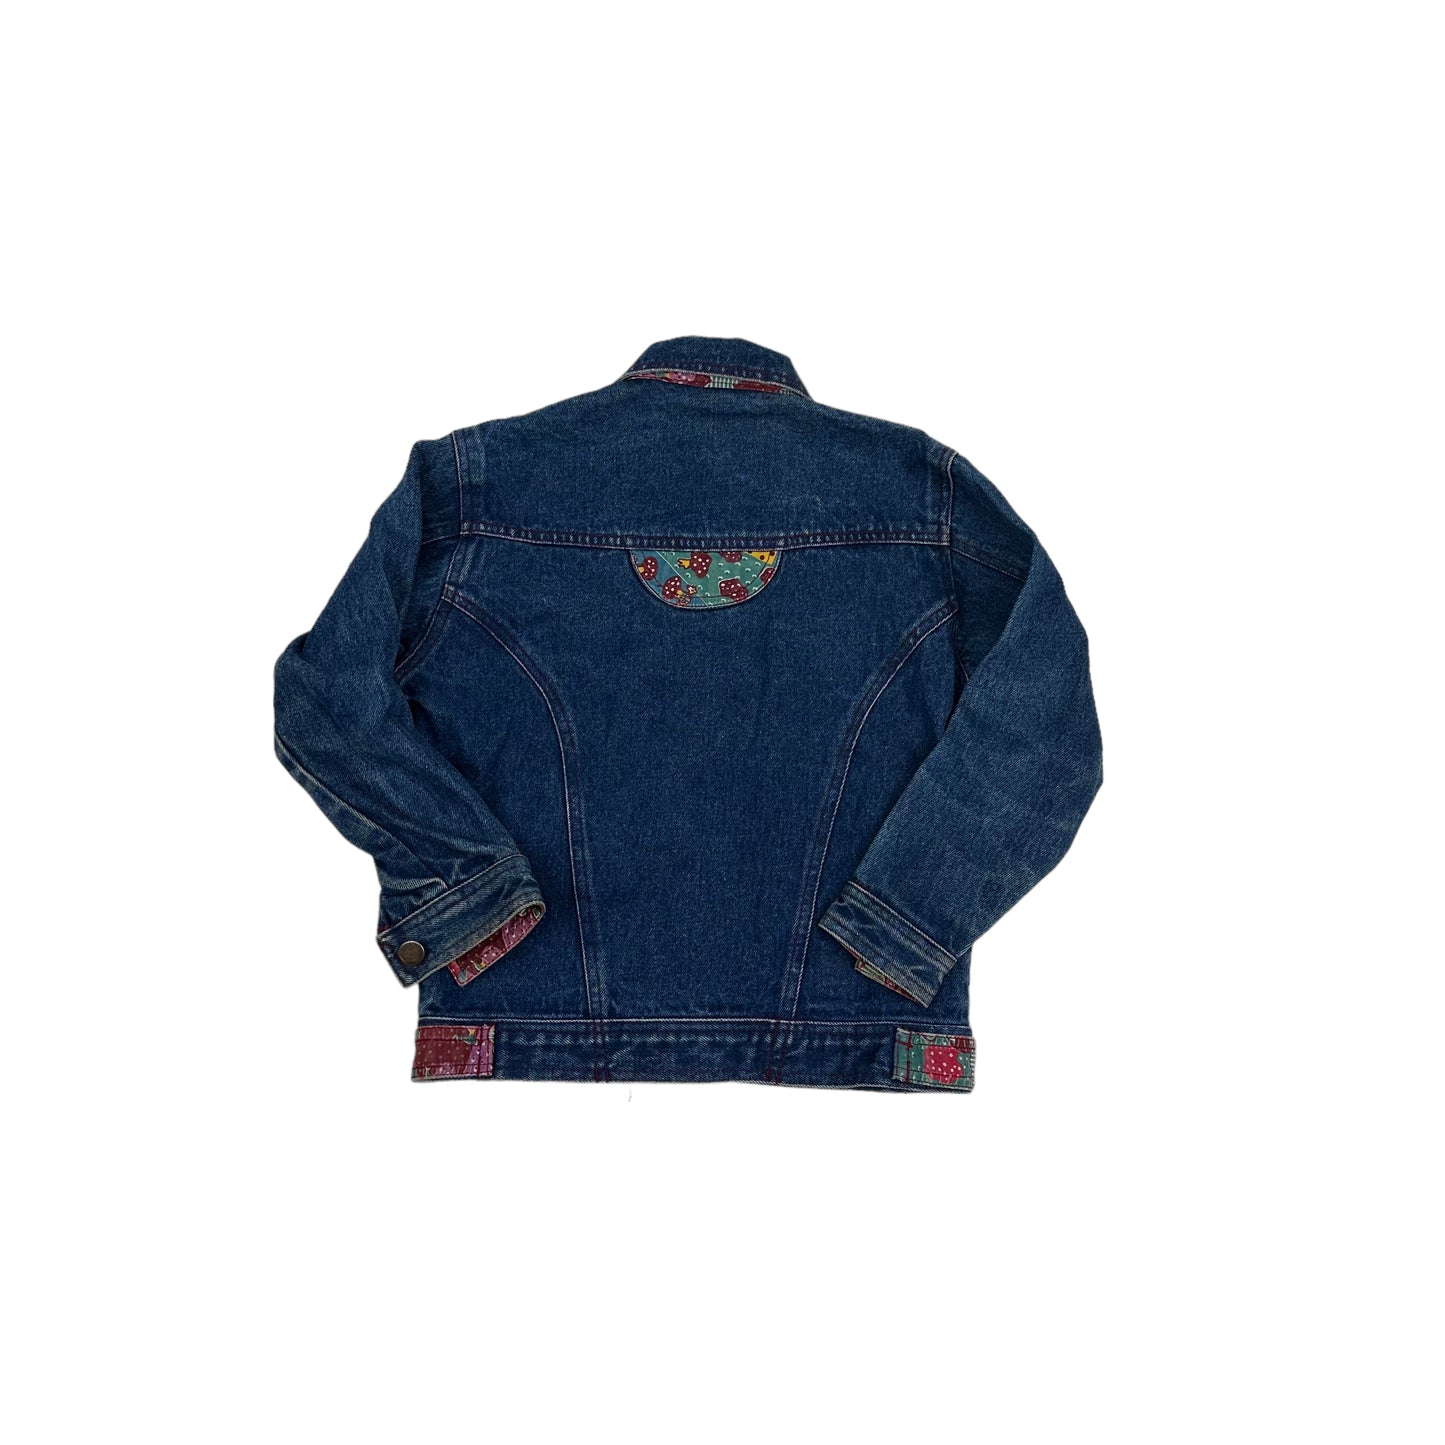 Vintage Denim Jacket (Age 10)